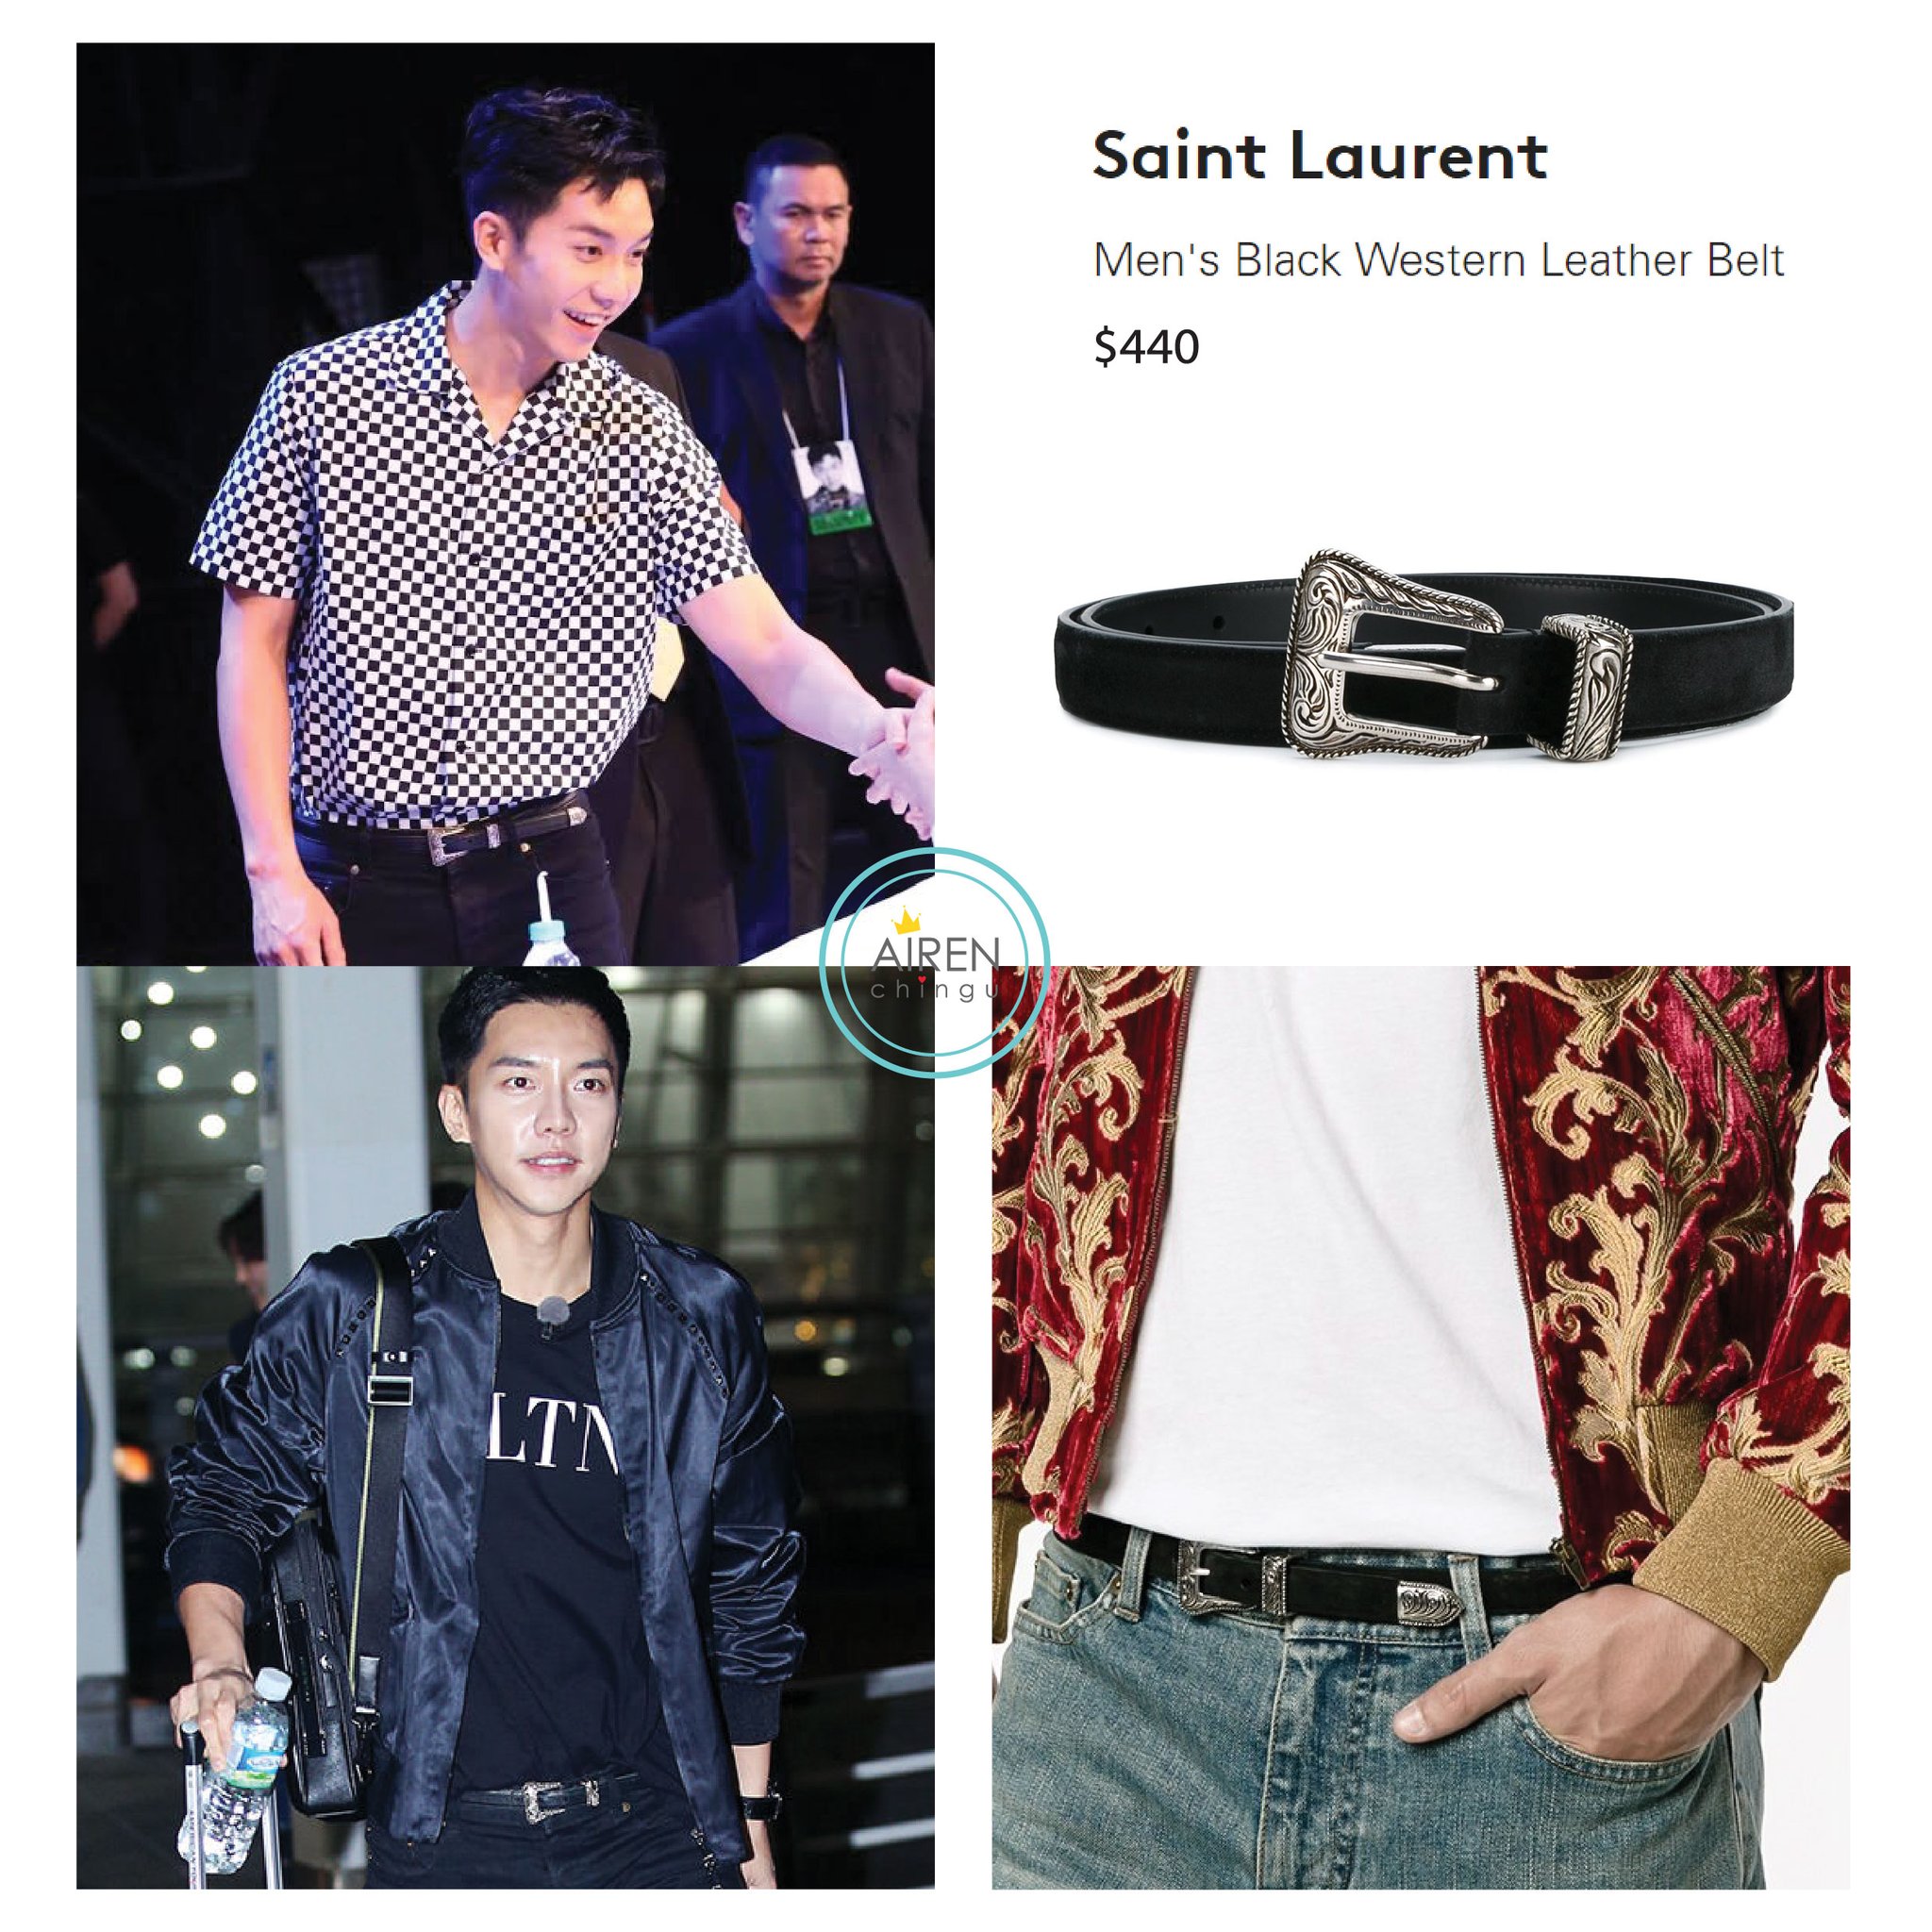 Airen Chingu on X: Lee Seung Gi X Saint Laurent - Western Leather Belt  #이승기 #2018lsgfanmeetinginbkk #leeseunggi  / X